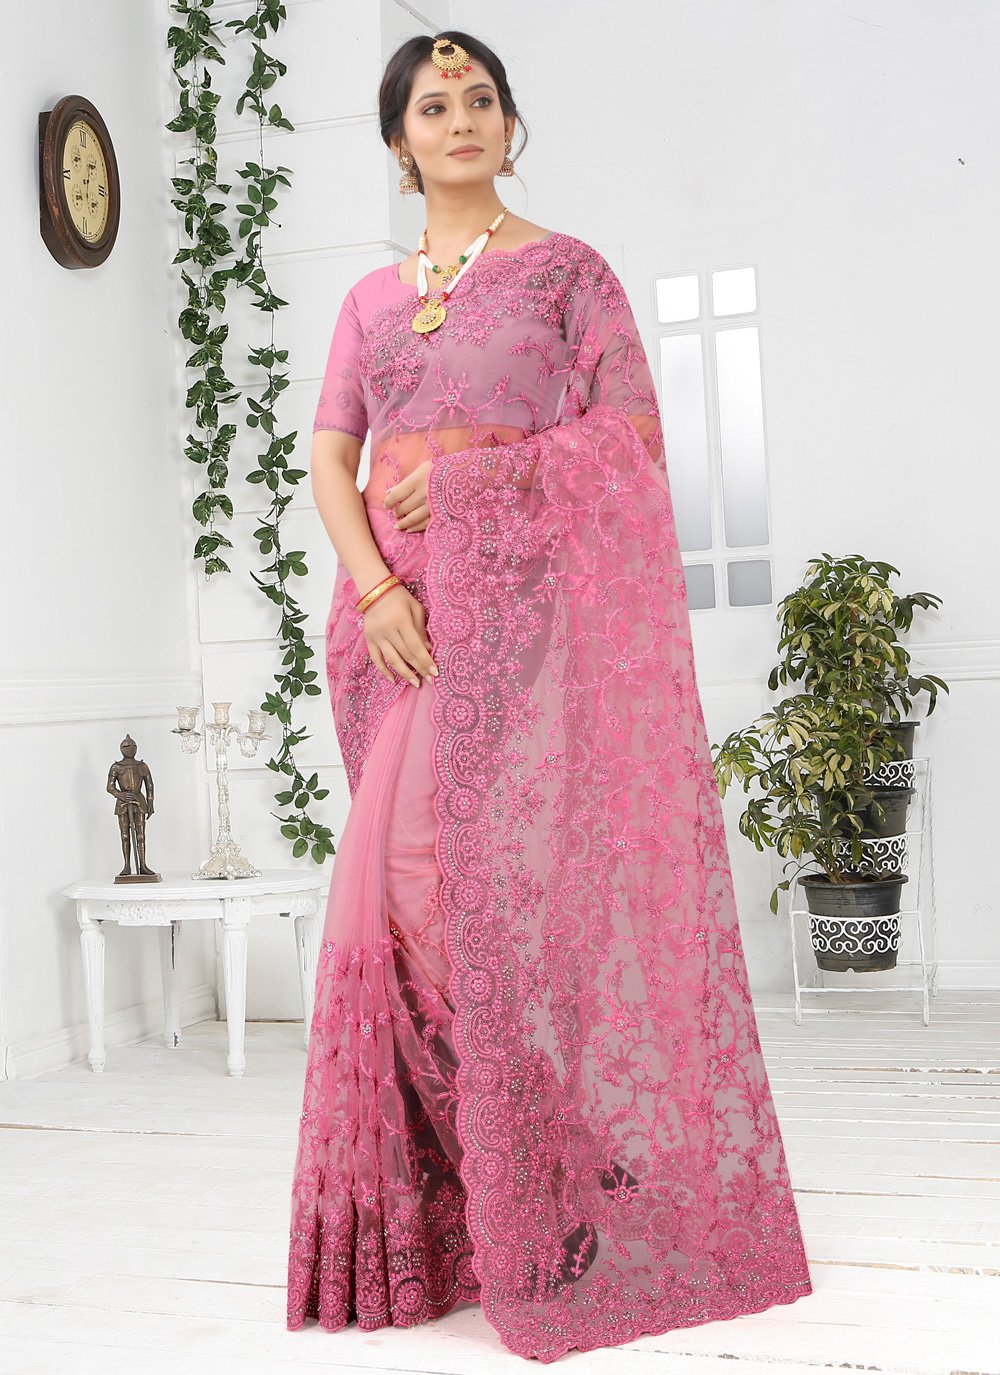 Embroidered Net Designer Saree in Pink